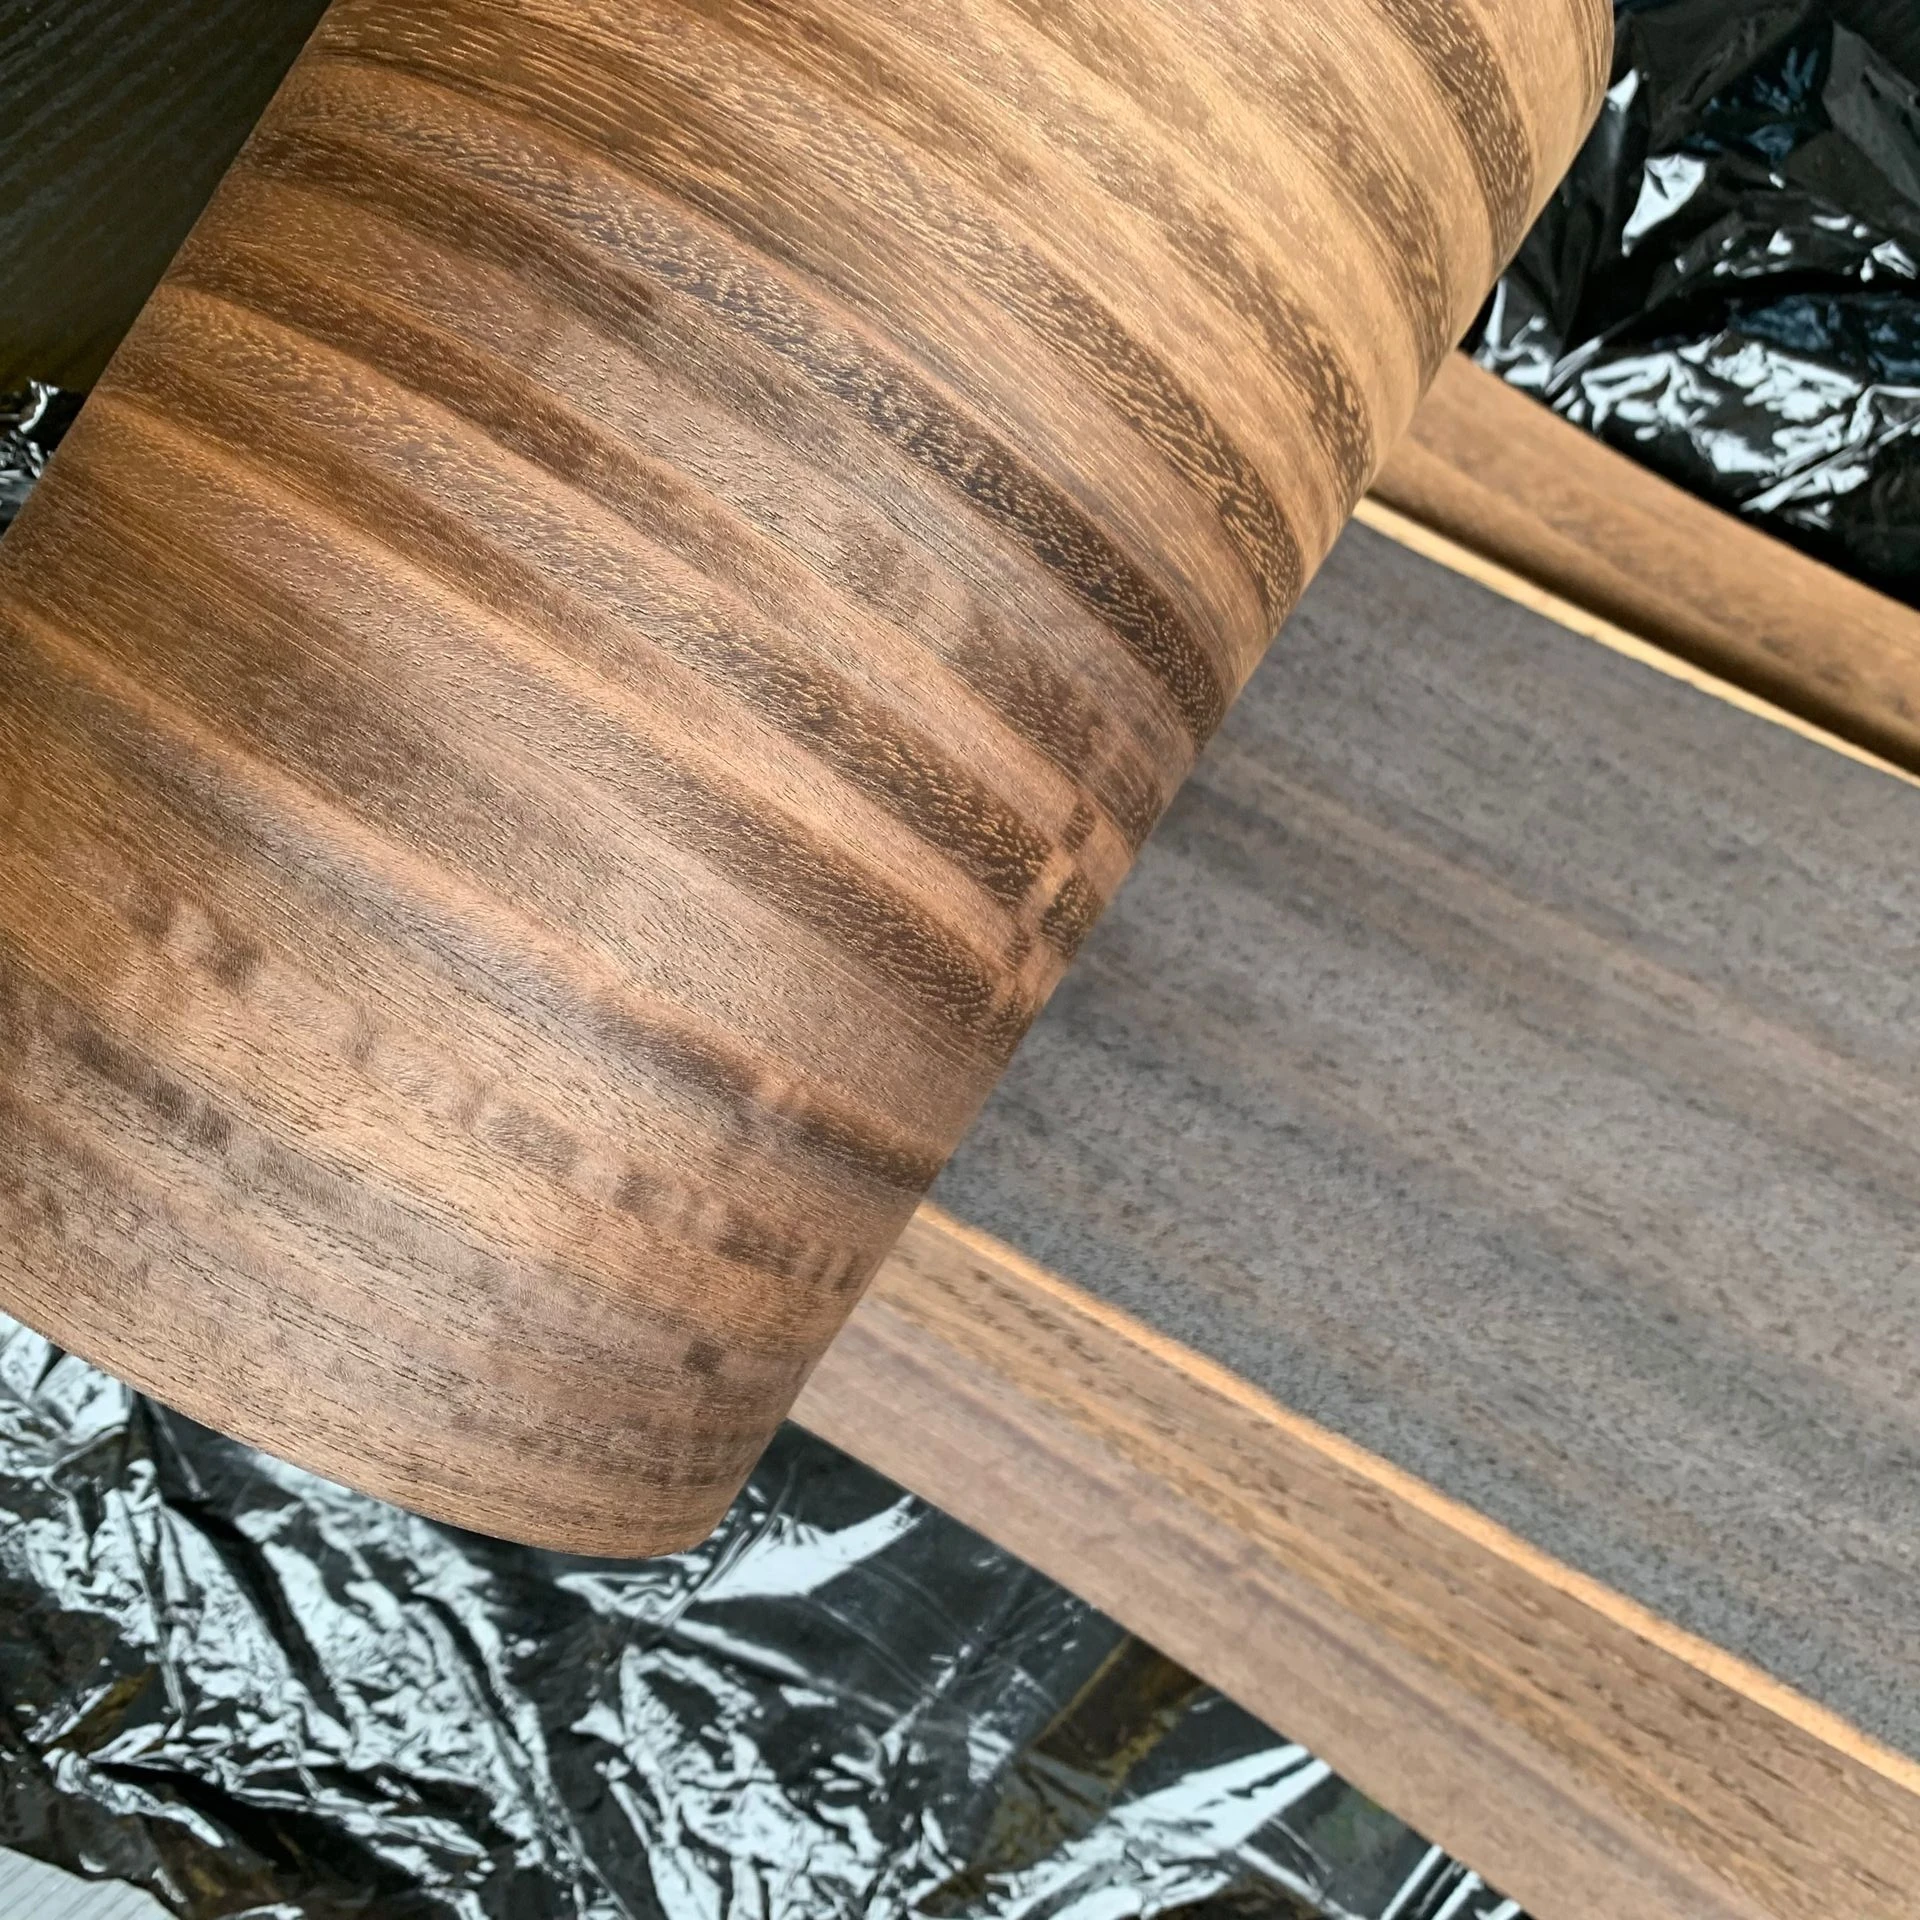 Chapa de roble ahumado para muebles, madera Natural auténtica de eucalipto, café marrón Vintage, bricolaje